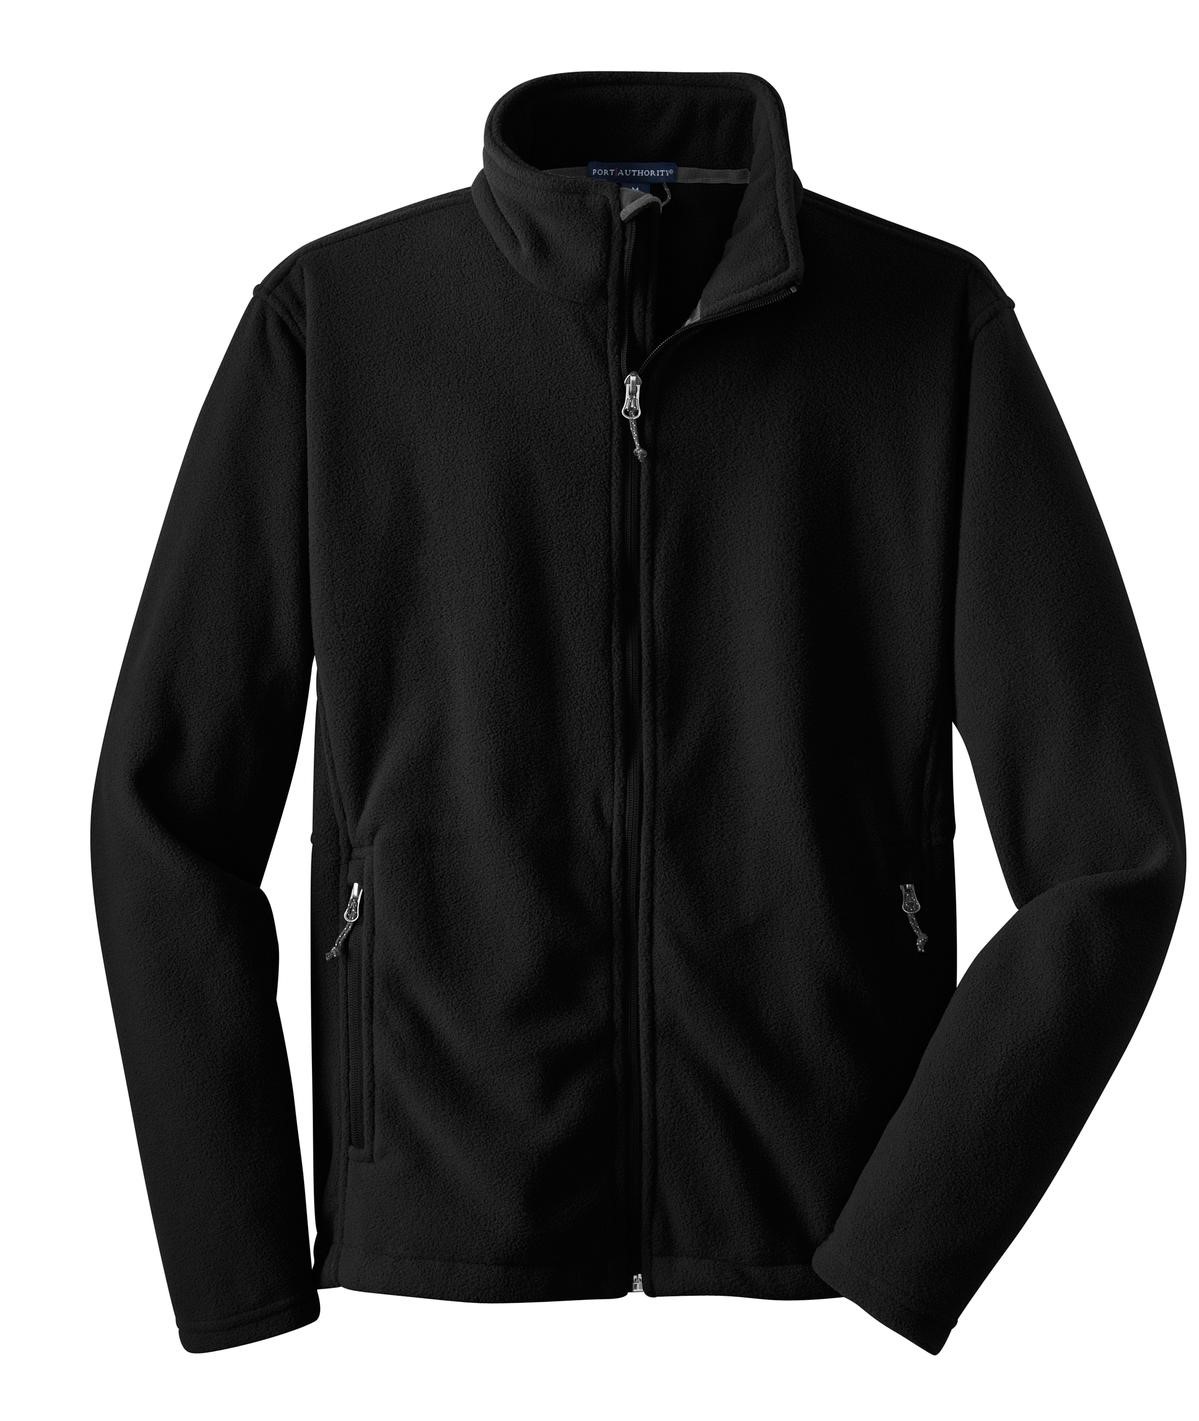 HC-Adult Navy colorpolar fleece jacket with Logo